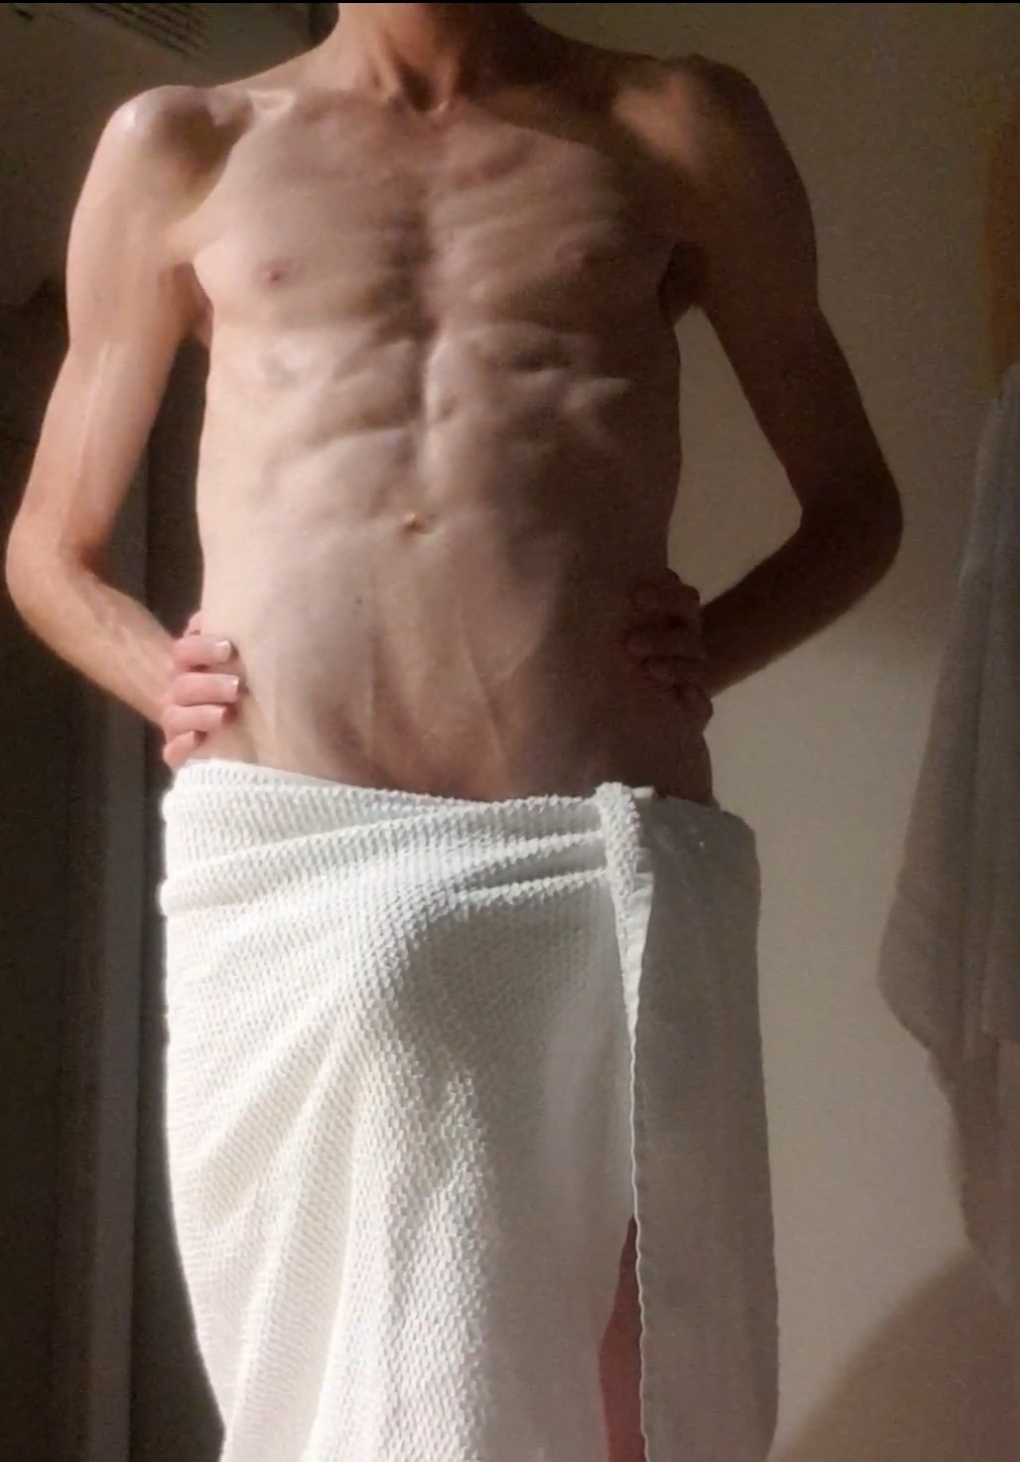 Skinny muscular boy in towel